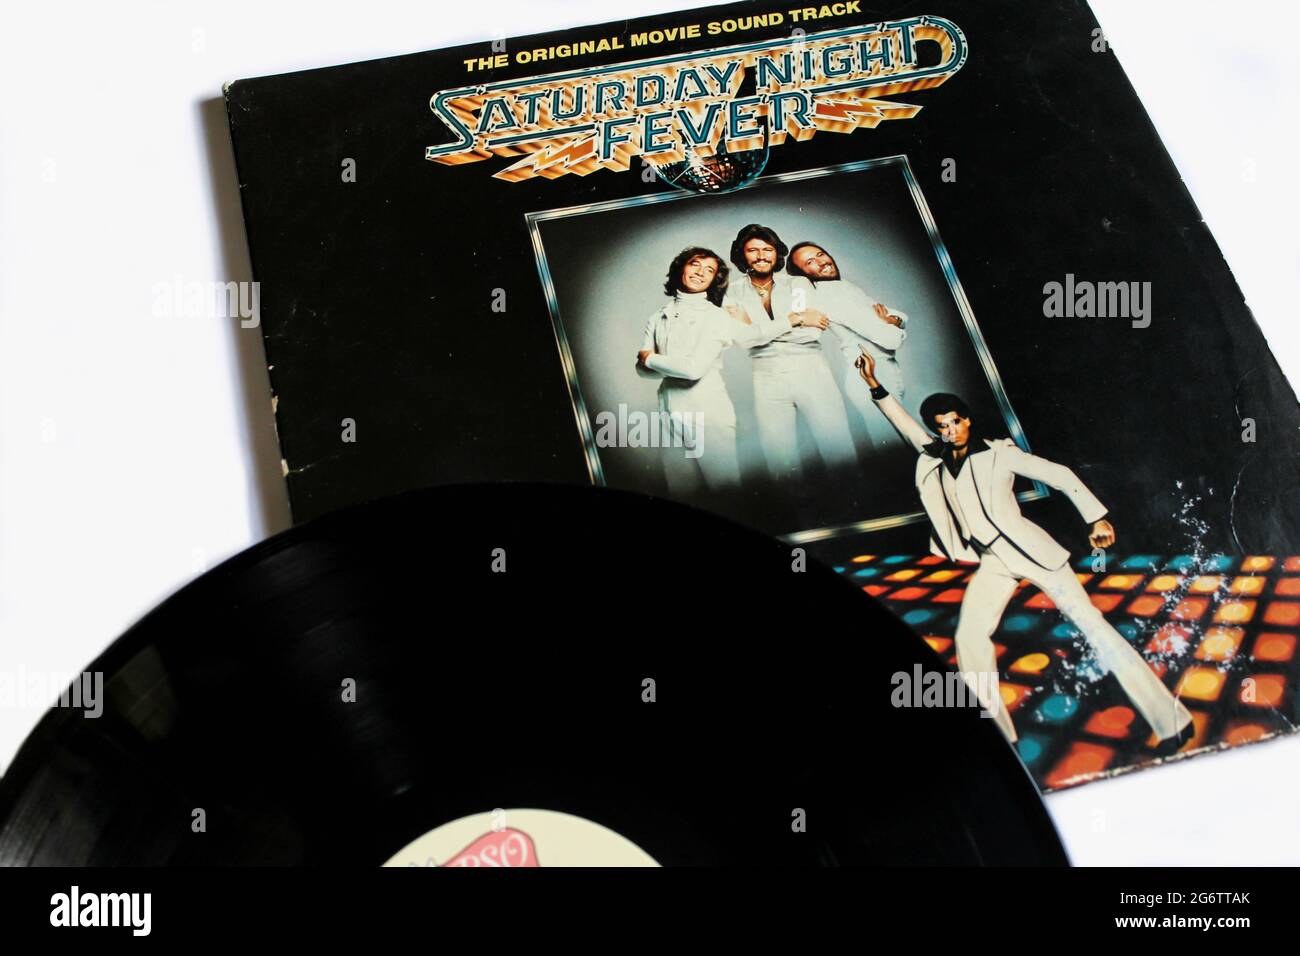 Saturday Night Fever der Soundtrack aus dem Film Saturday Night Fever mit John Travolta-Musik von The Bee Gees. Disco und Soul Album Cover Vinyl Stockfoto